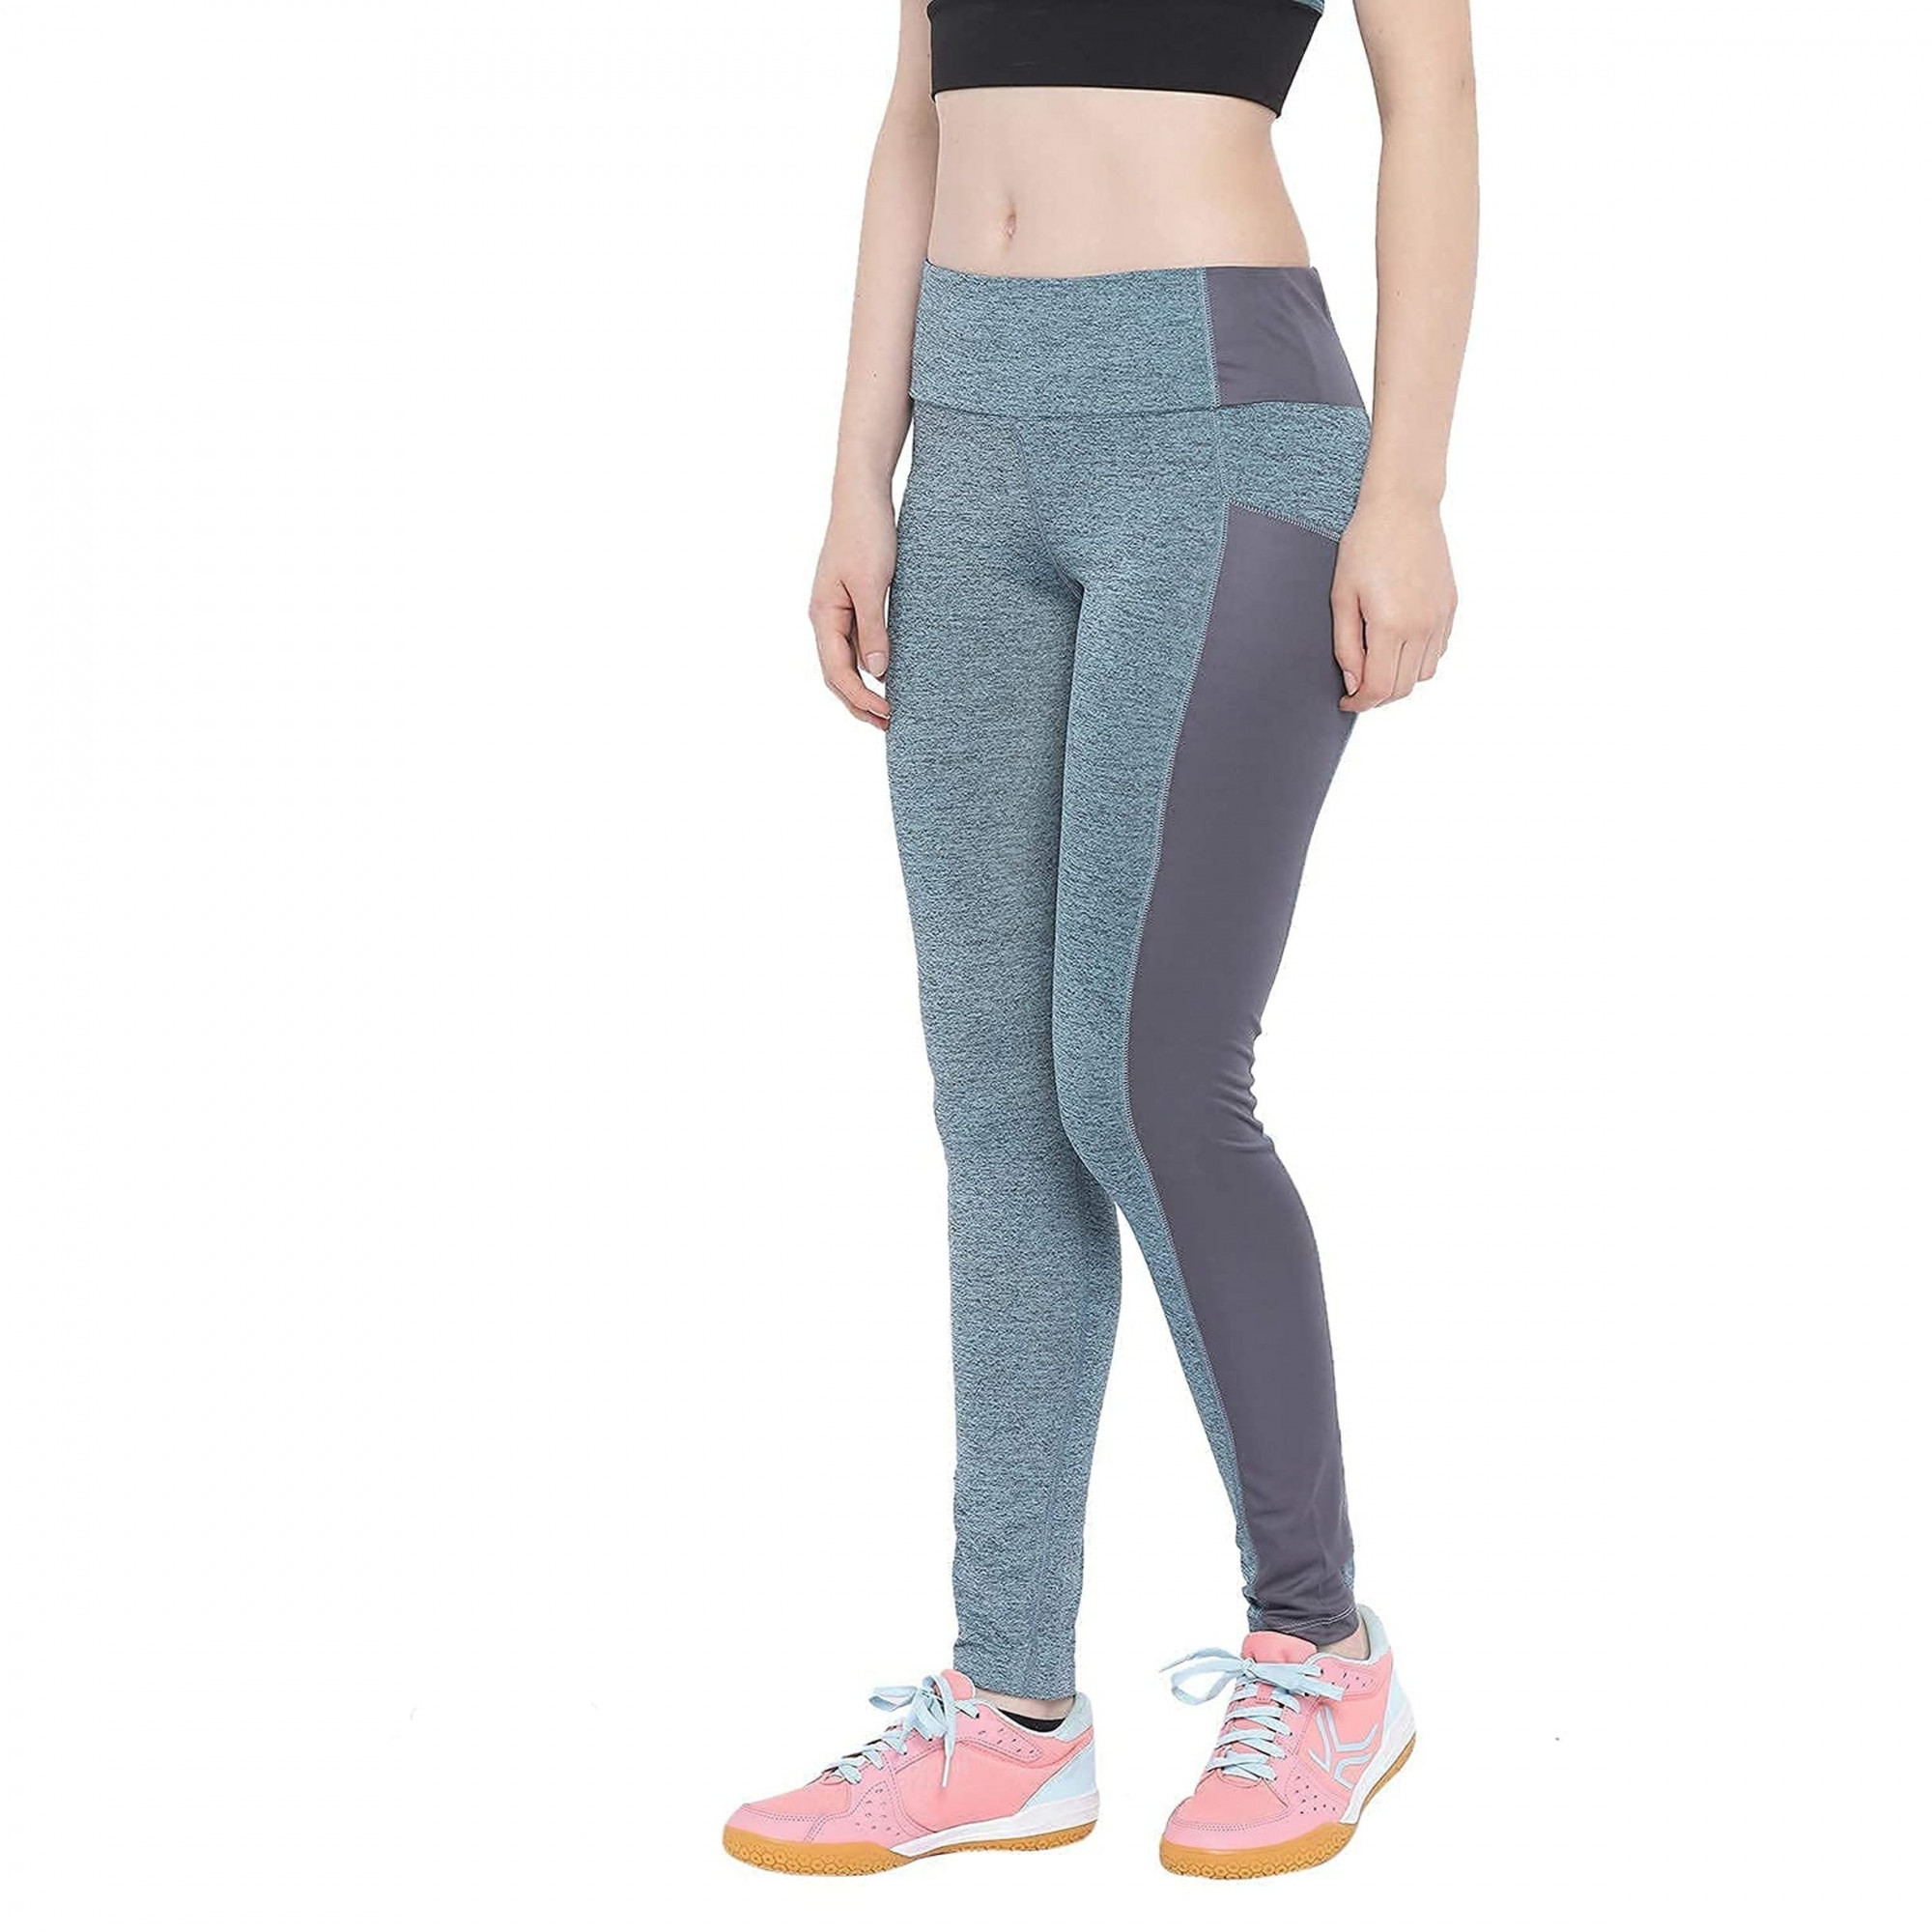 chkokko women skinny fit yoga track pants stretchable gym legging tights black maroon size msize 30 278749199660570 l